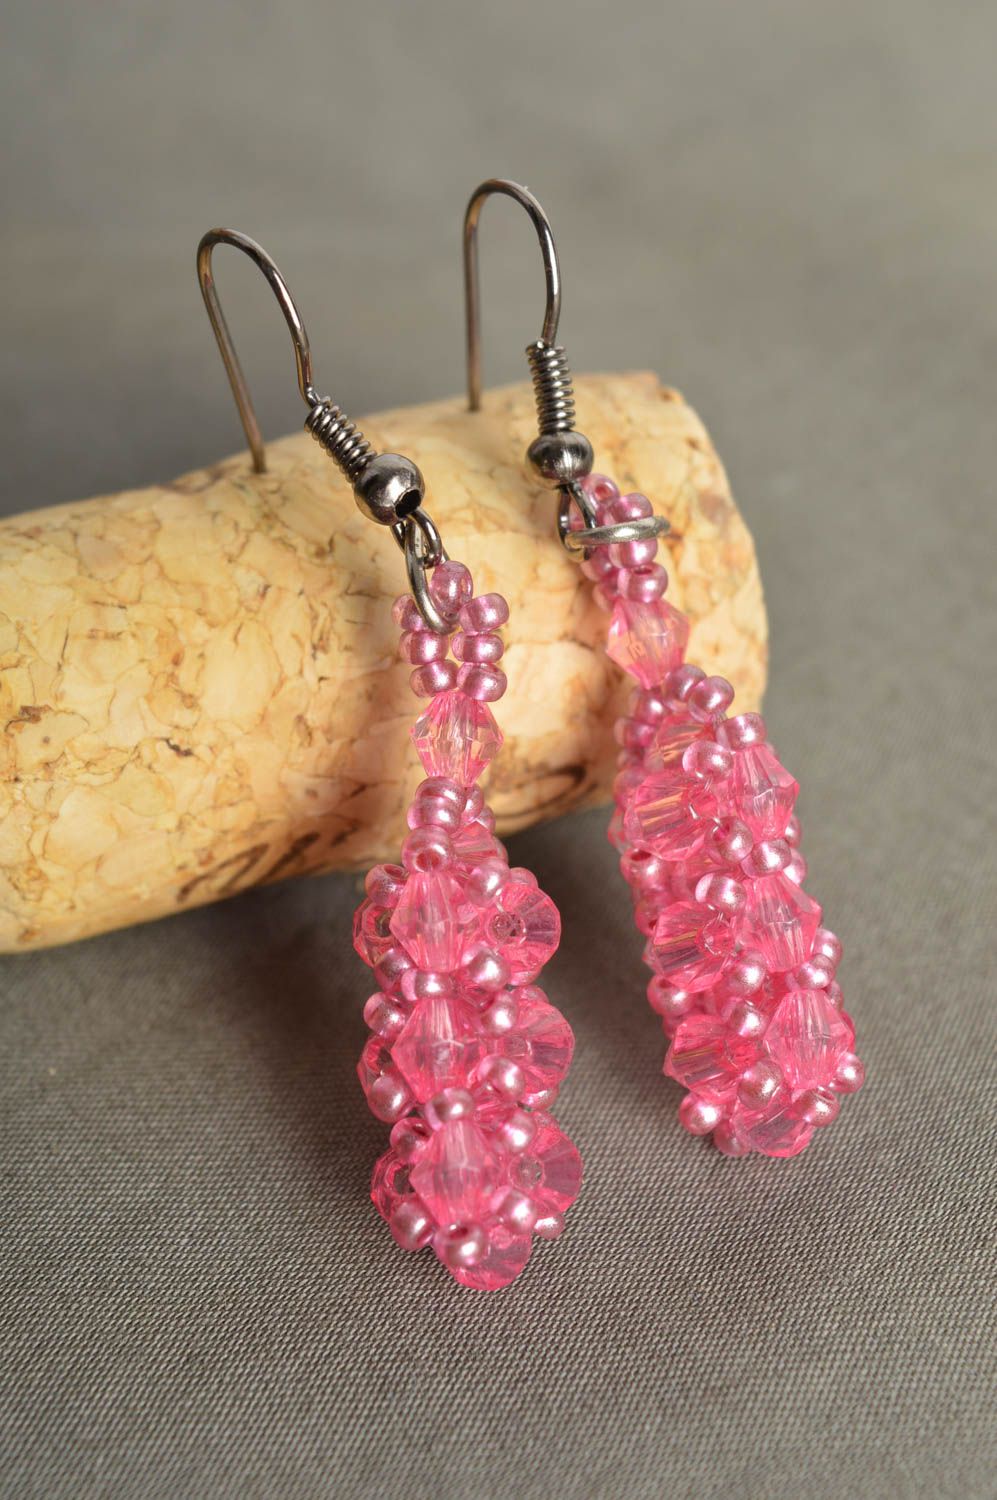 Cute handmade beaded earrings fashion accessories woven bead earrings gift ideas photo 1